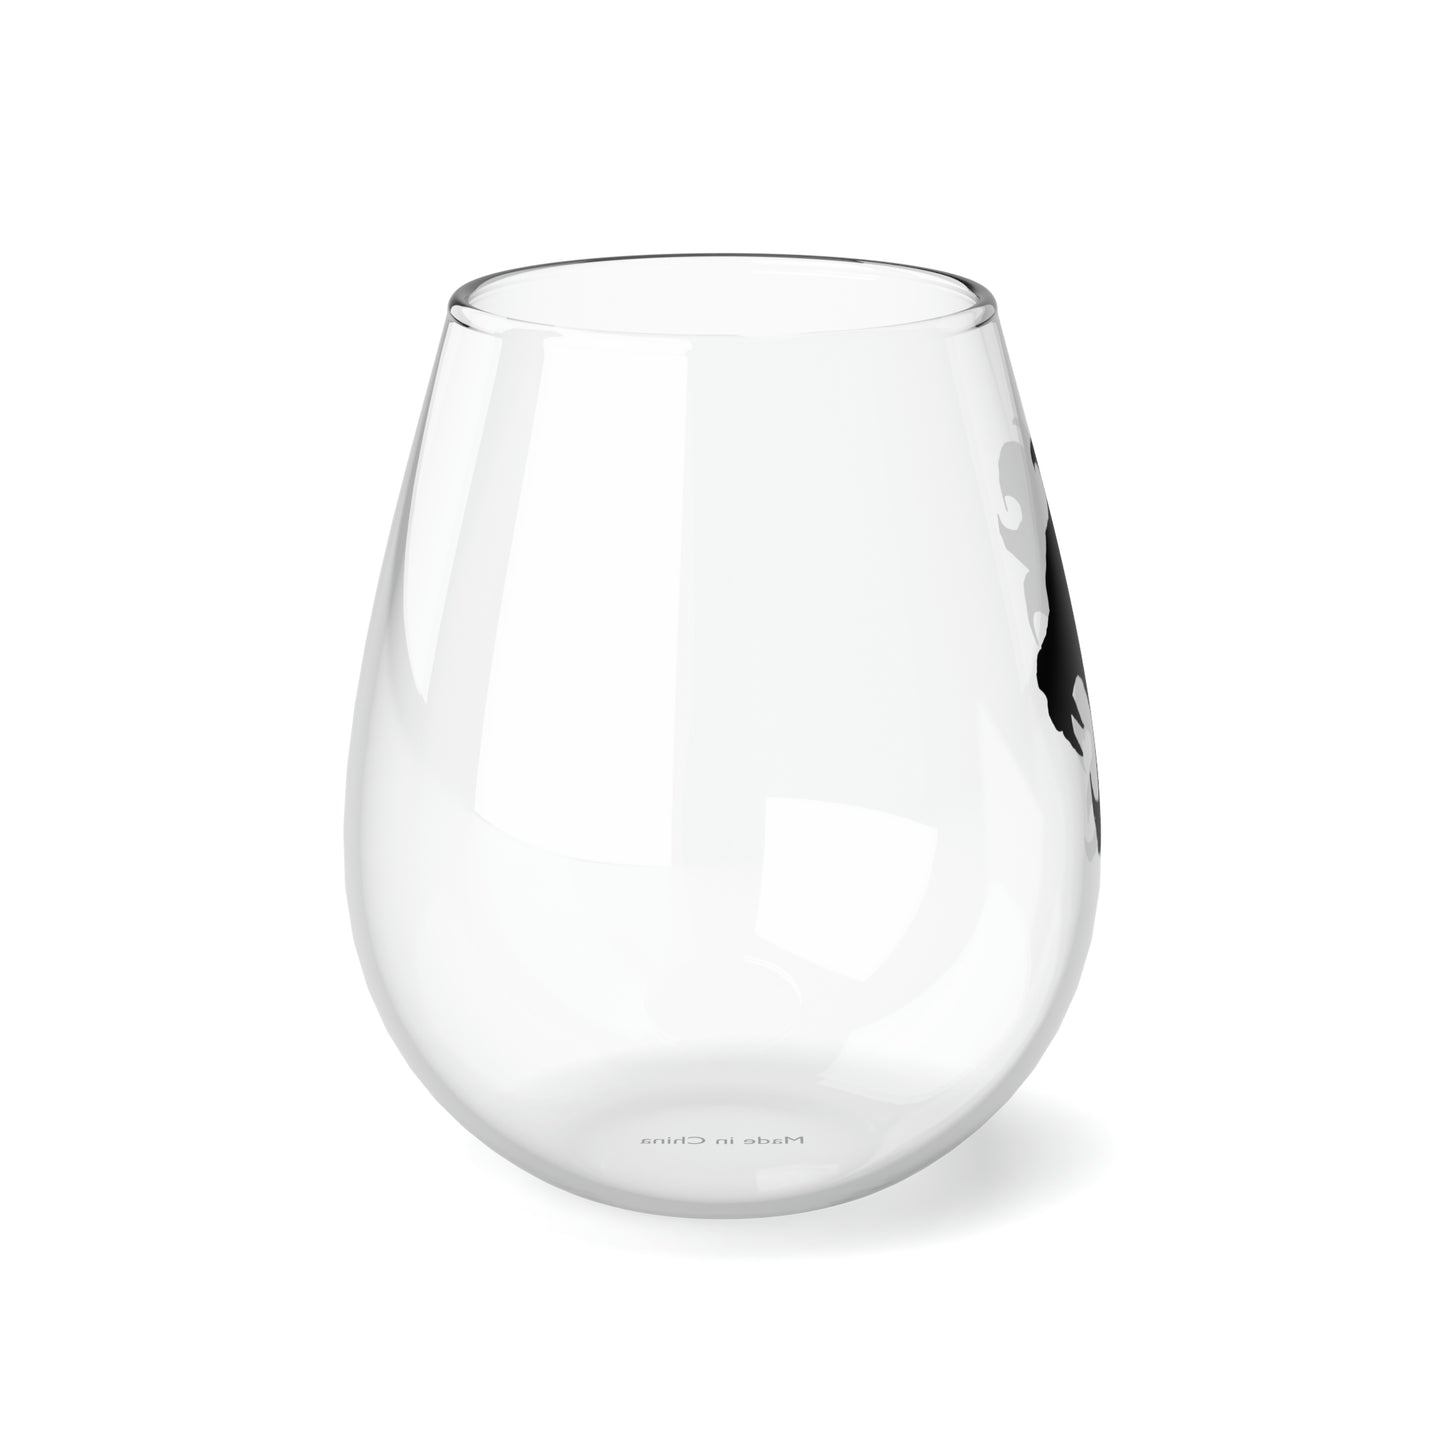 Roaring Lion Stemless Wine Glass, 11.75oz